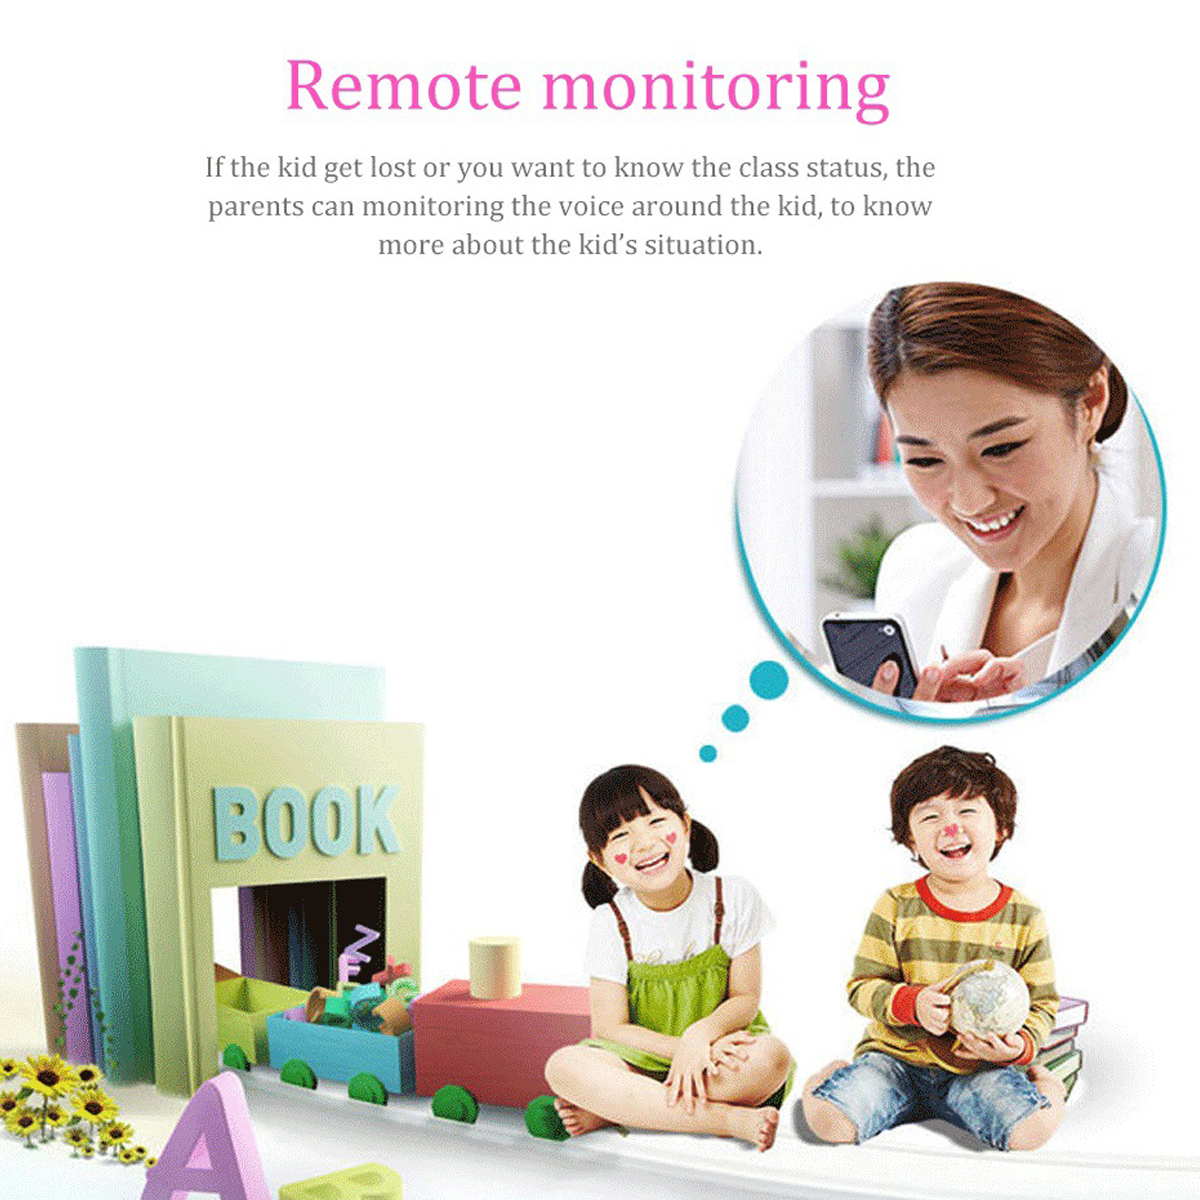 Remote monitoring